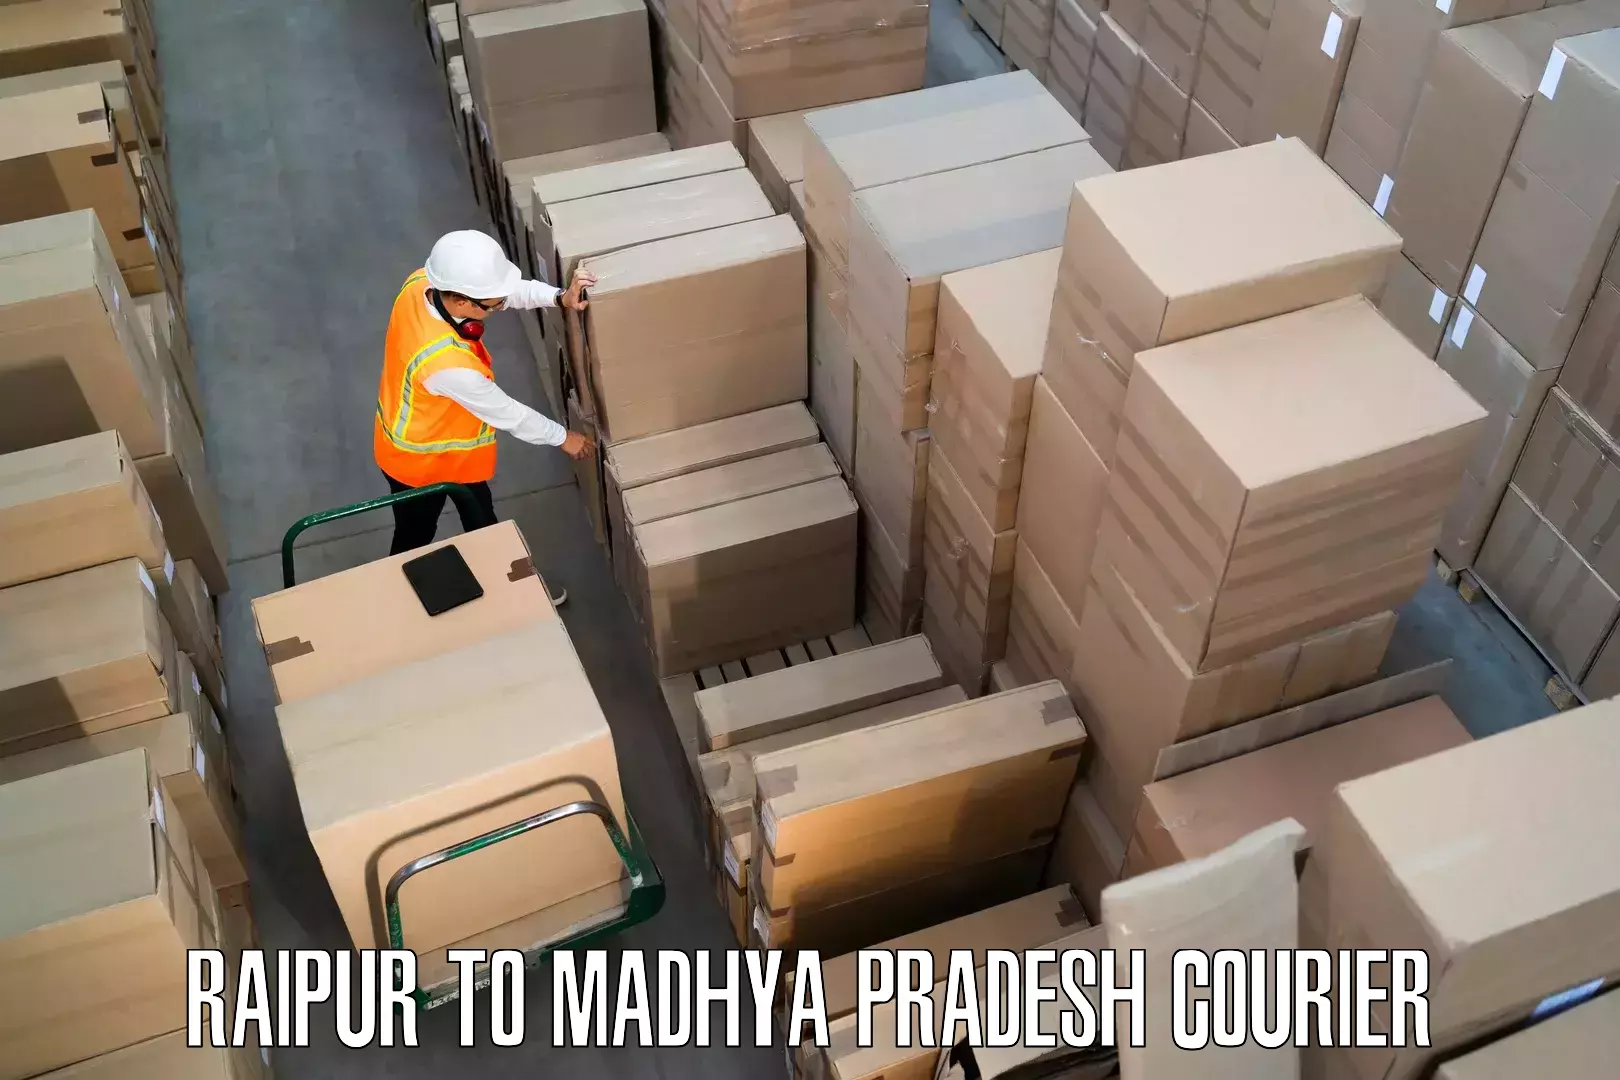 Professional moving company Raipur to Bhopal